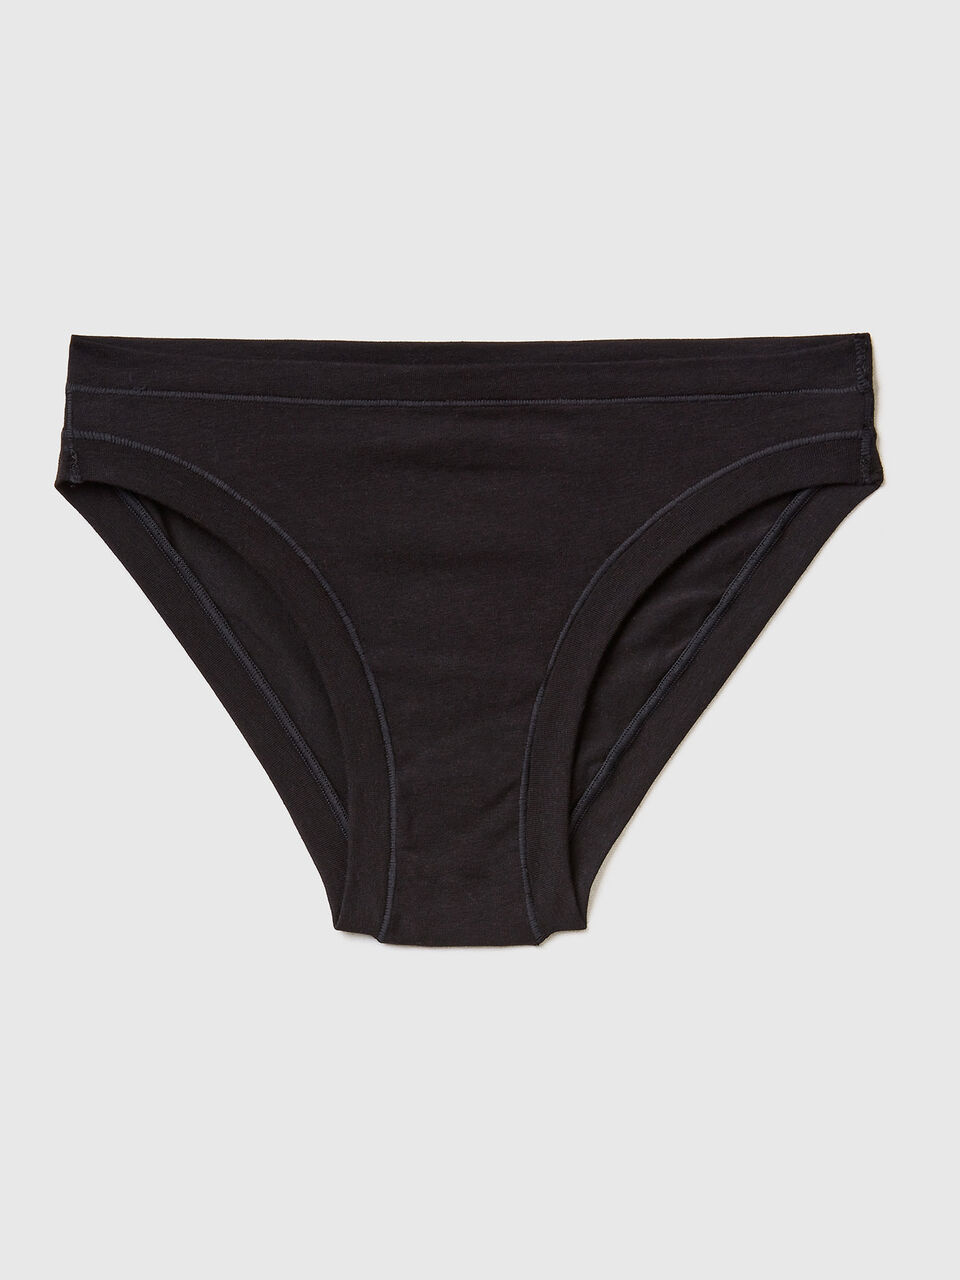 Cotton Blend Black Panties for Women for sale